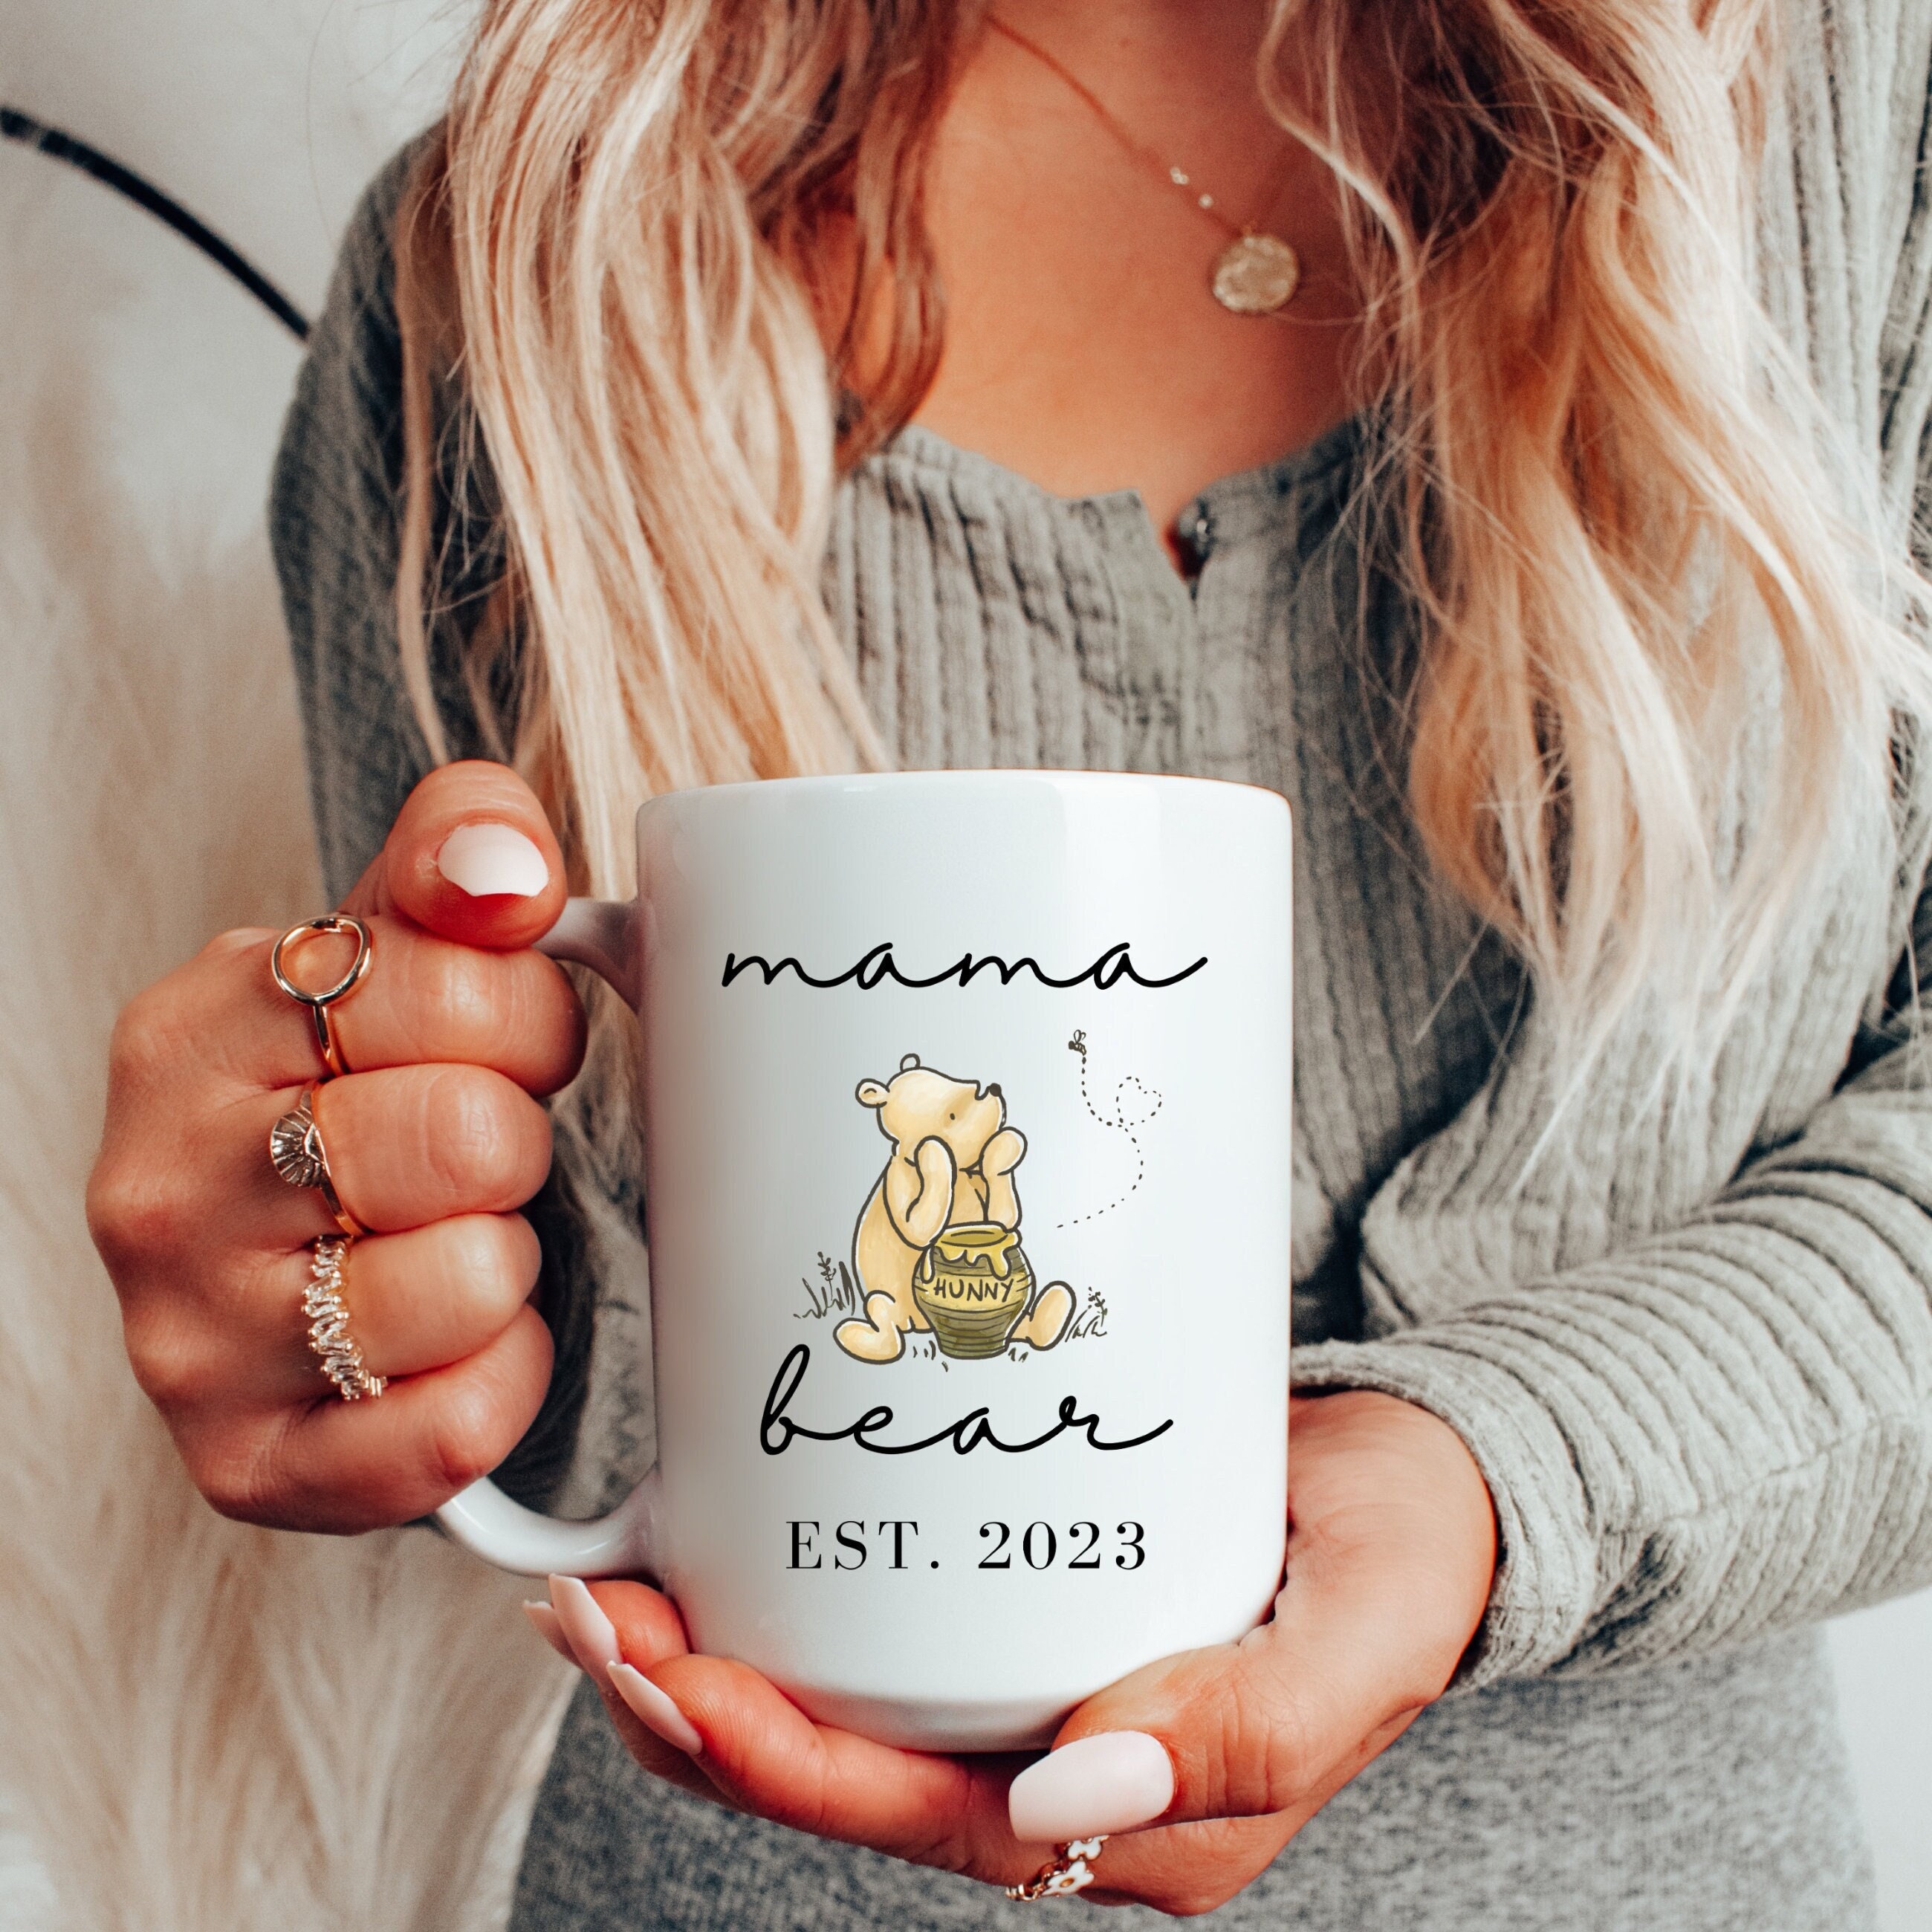 Mama Bear & Papa Bear Mug Set of 2 – Kedziefest Parties